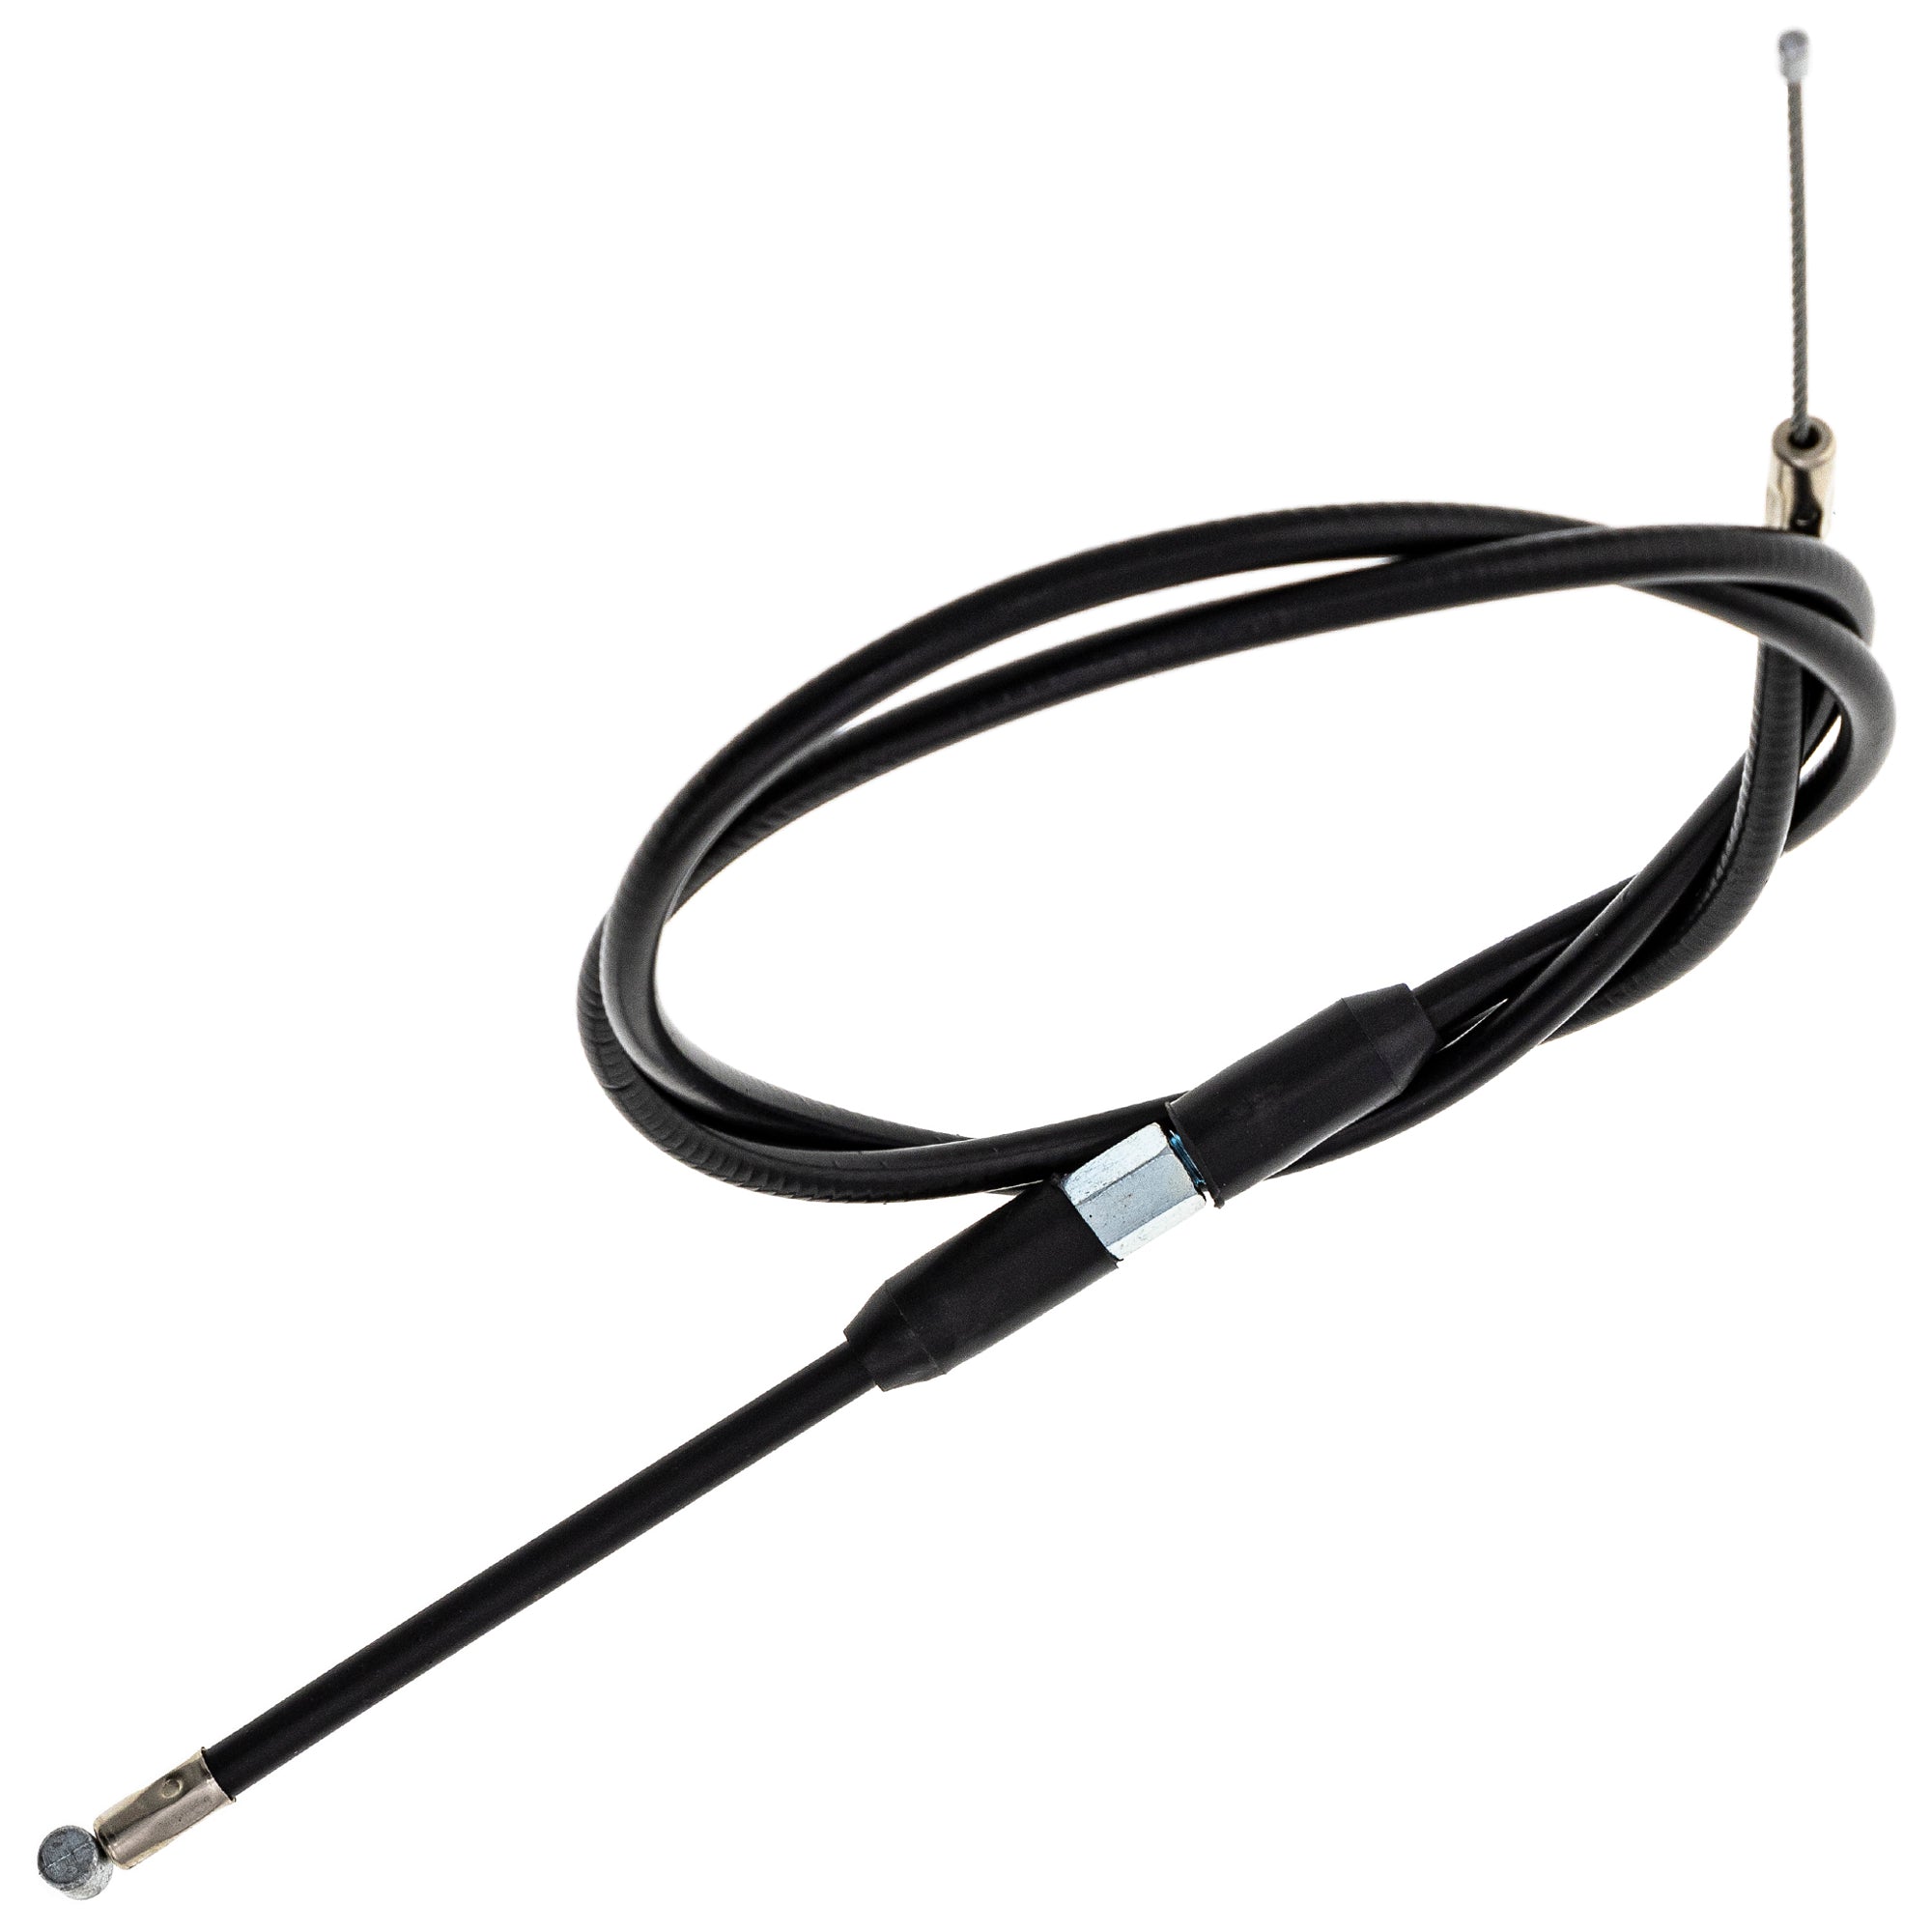 Hot Start Cable for Suzuki RMZ250 RMZ450 58900-49H10 58900-28H00